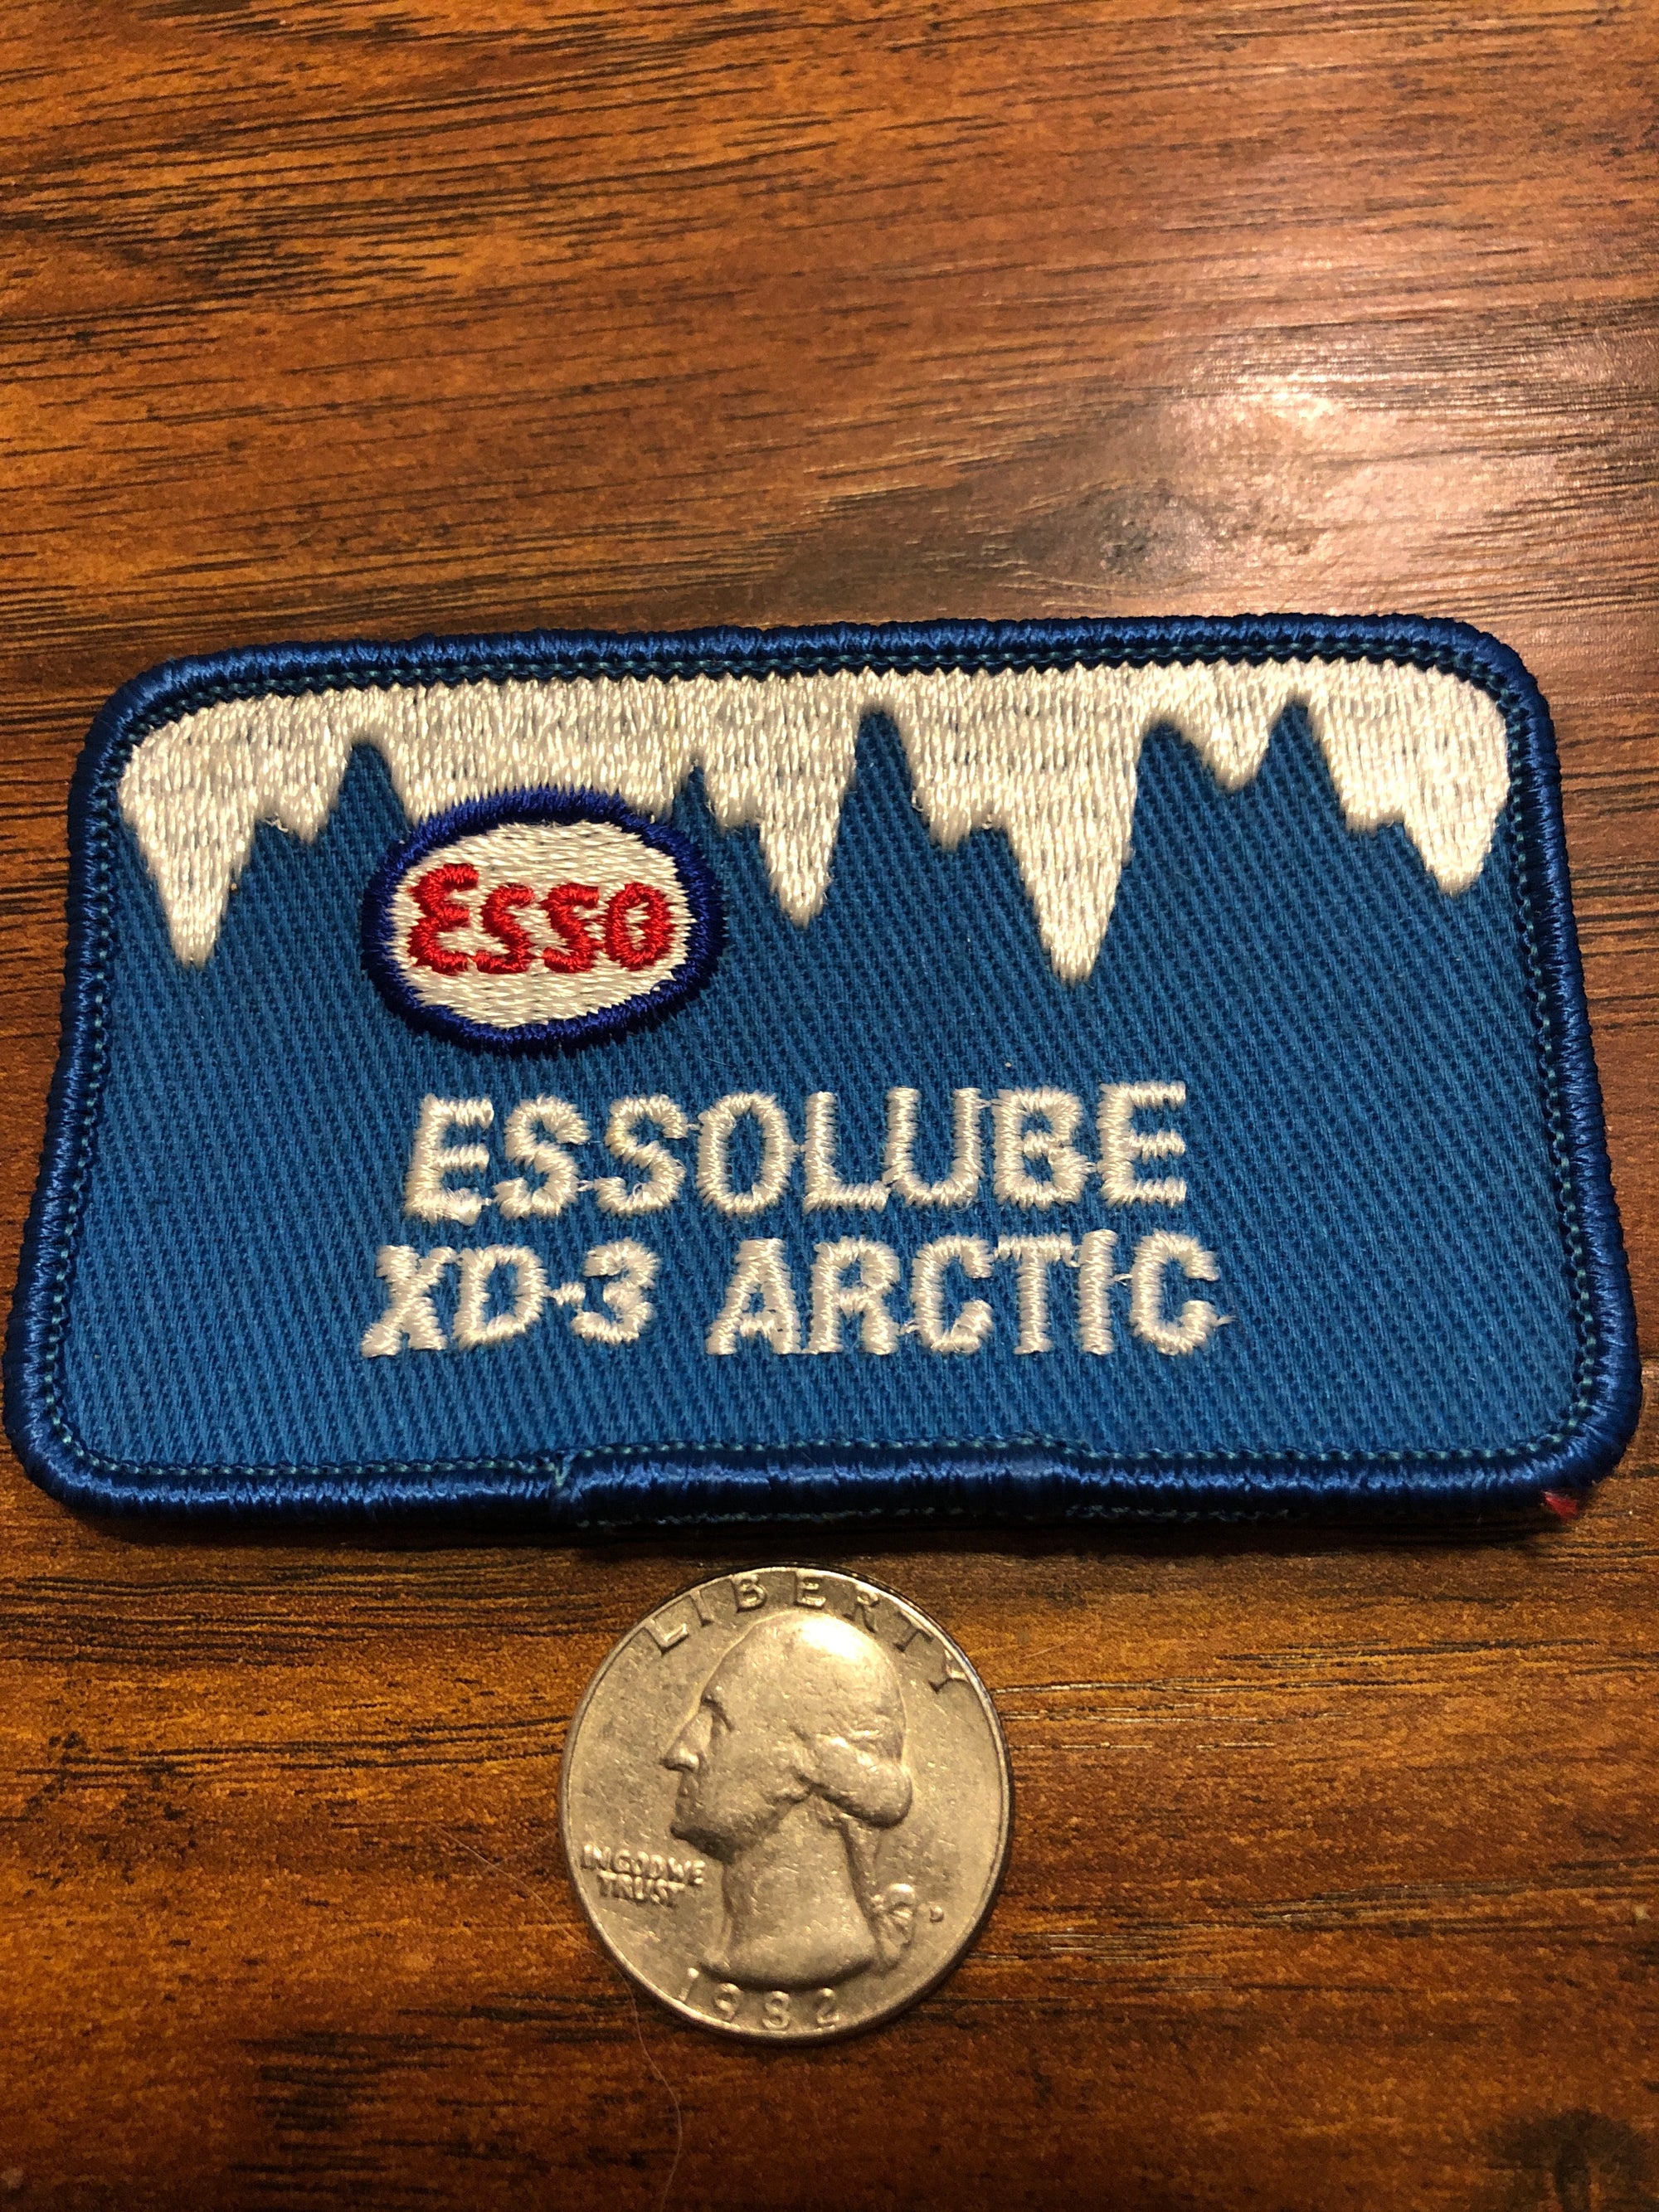 Vintage Esso XD3 Artic